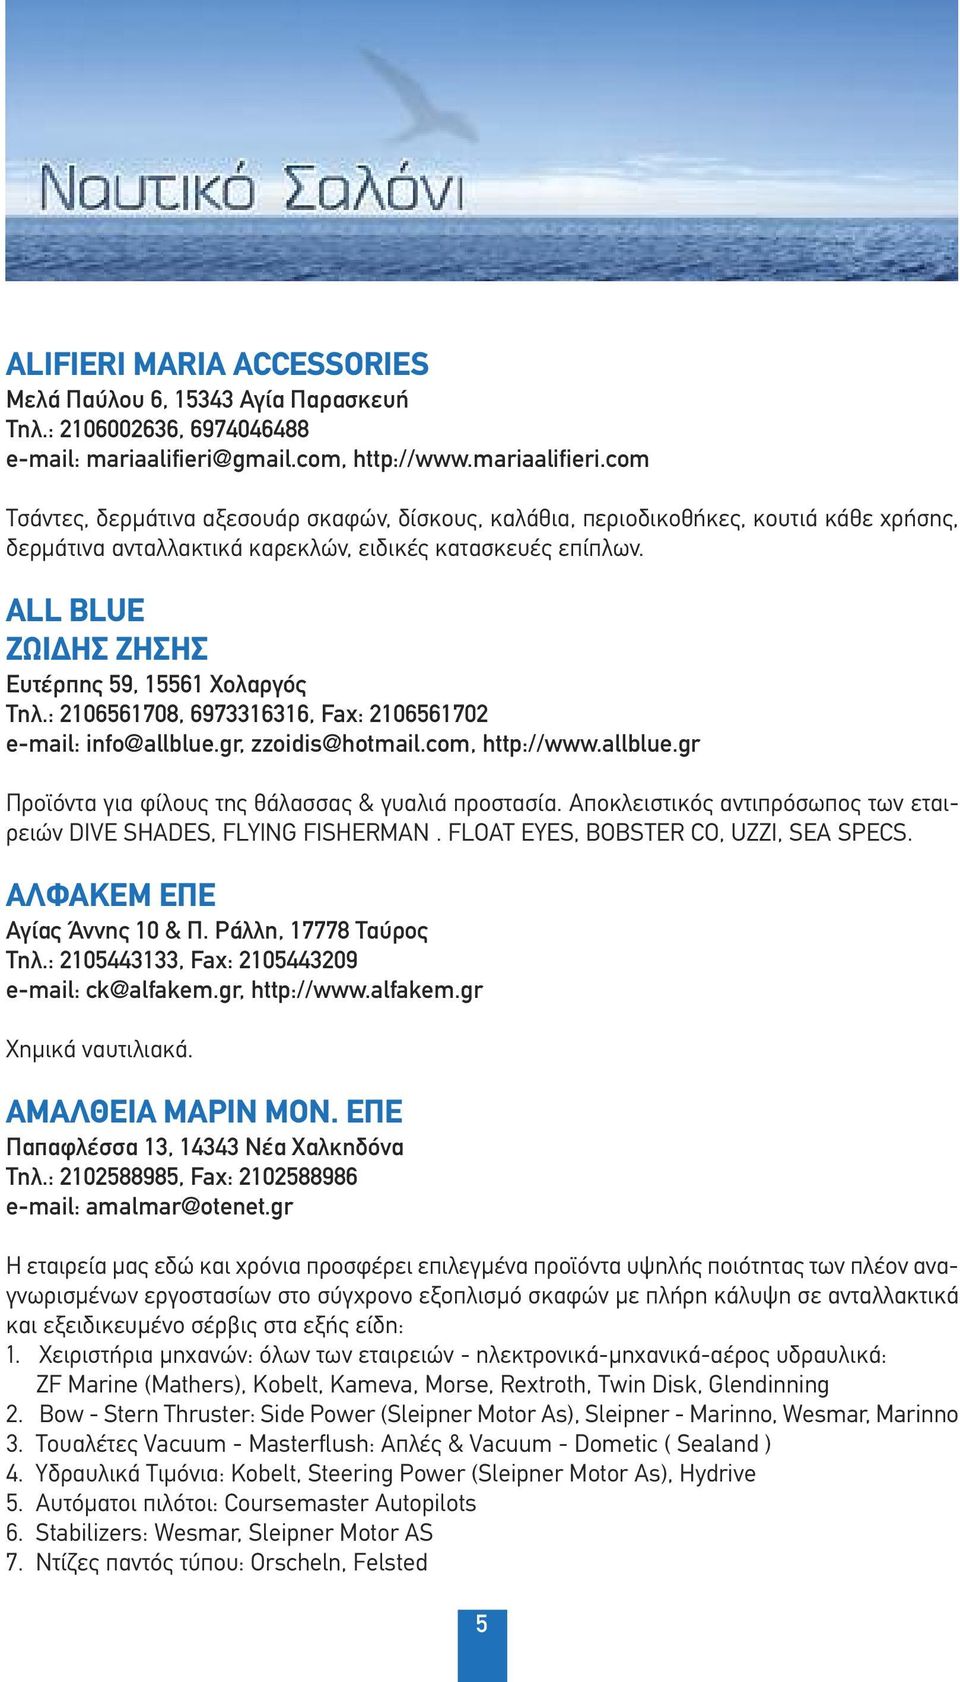 ALL BLUE ΖΩΙΔΗΣ ΖΗΣΗΣ Ευτέρπης 59, 15561 Χολαργός Τηλ.: 2106561708, 6973316316, Fax: 2106561702 e-mail: info@allblue.gr, zzoidis@hotmail.com, http://www.allblue.gr Προϊόντα για φίλους της θάλασσας & γυαλιά προστασία.